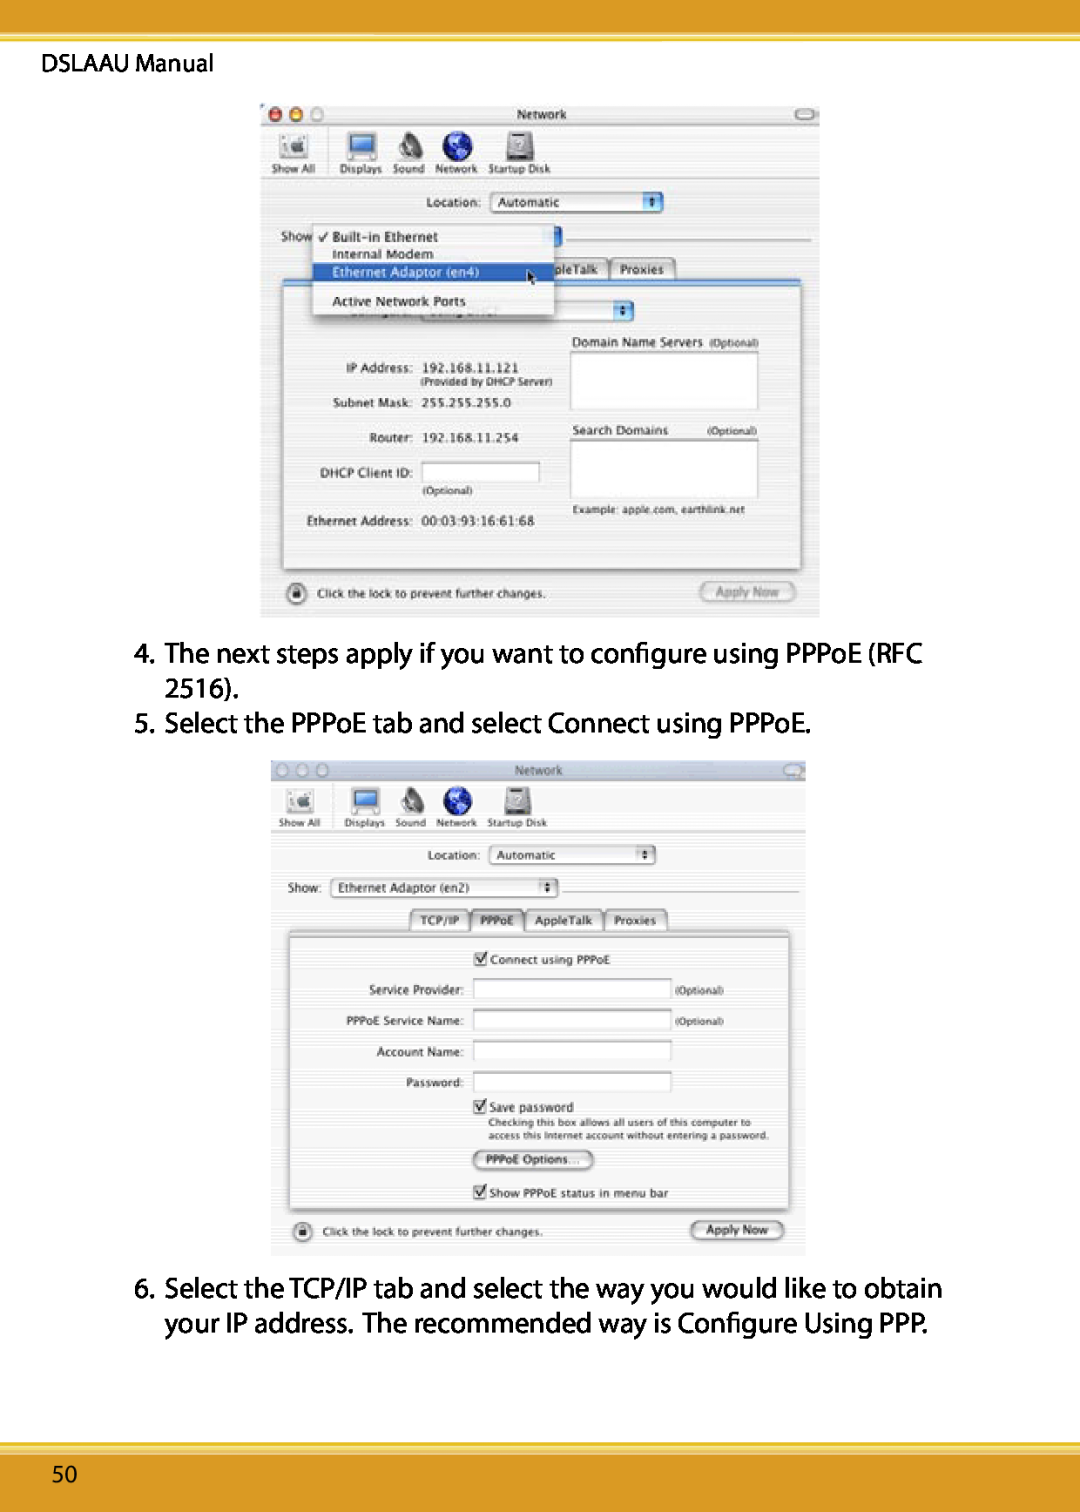 Corega user manual The next steps apply if you want to conﬁgure using PPPoE RFC, DSLAAU Manual 